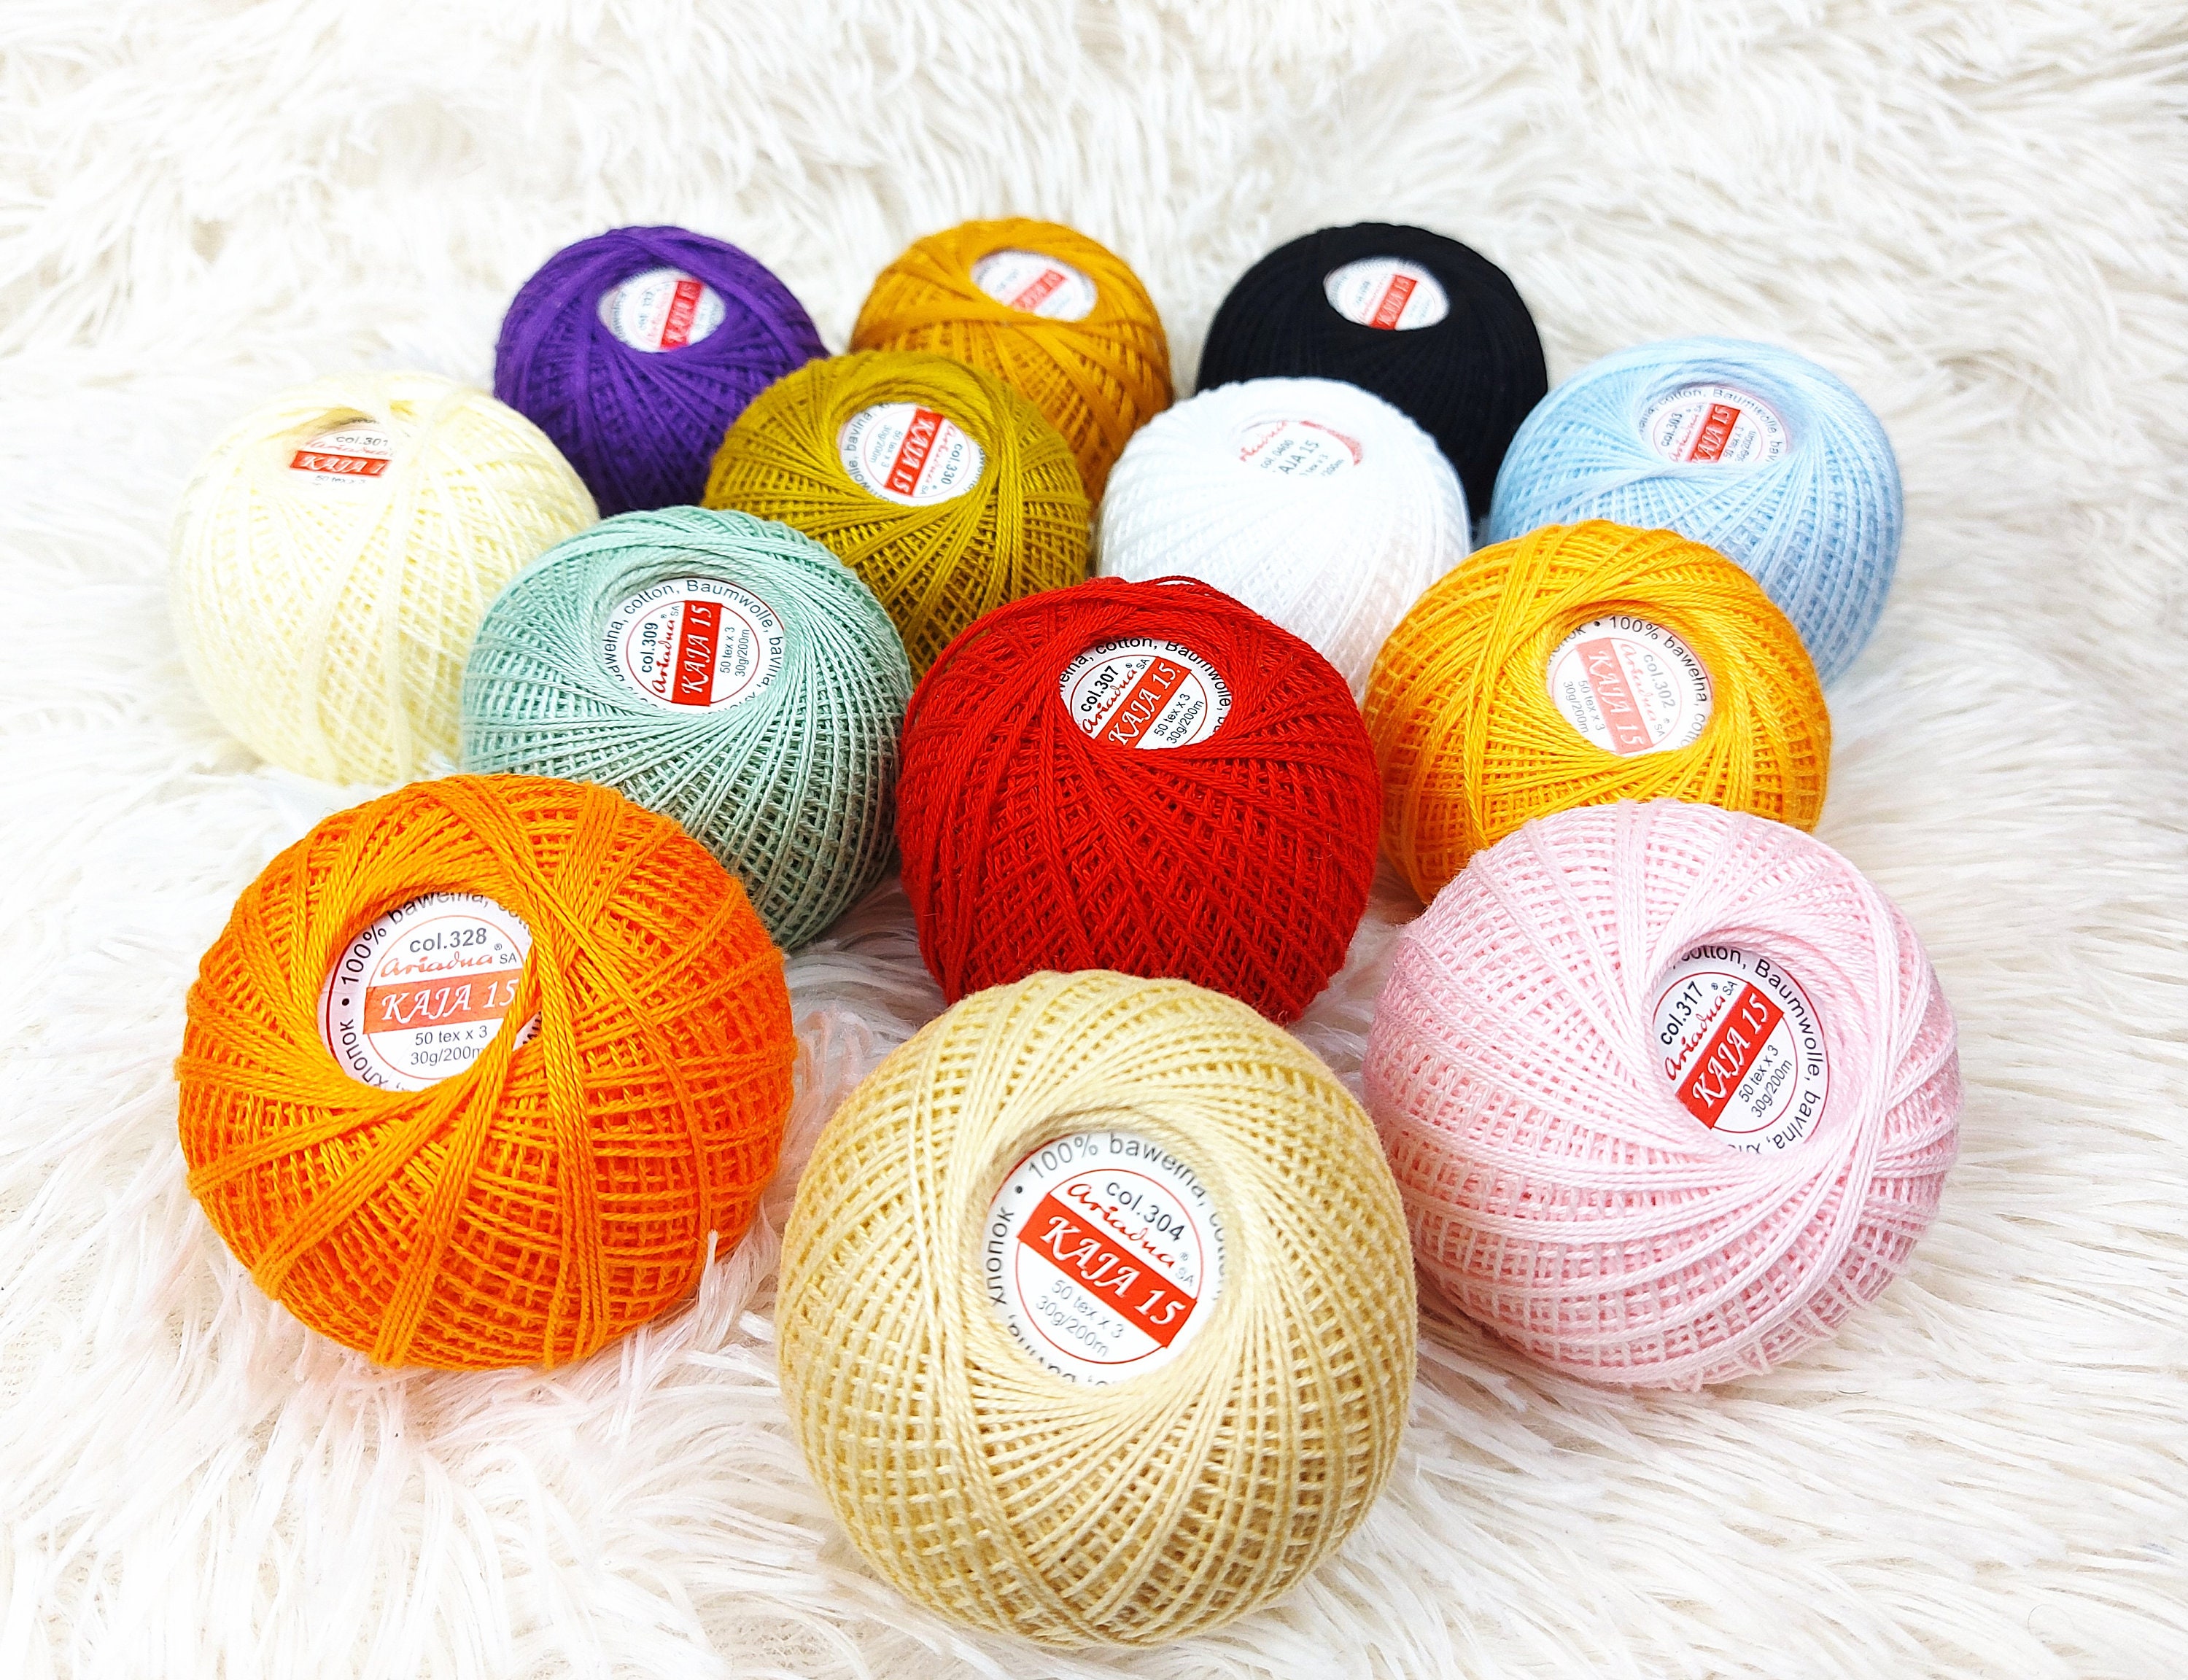 Aunt Lydias Crochet Thread Size 3, New Choice of Colors